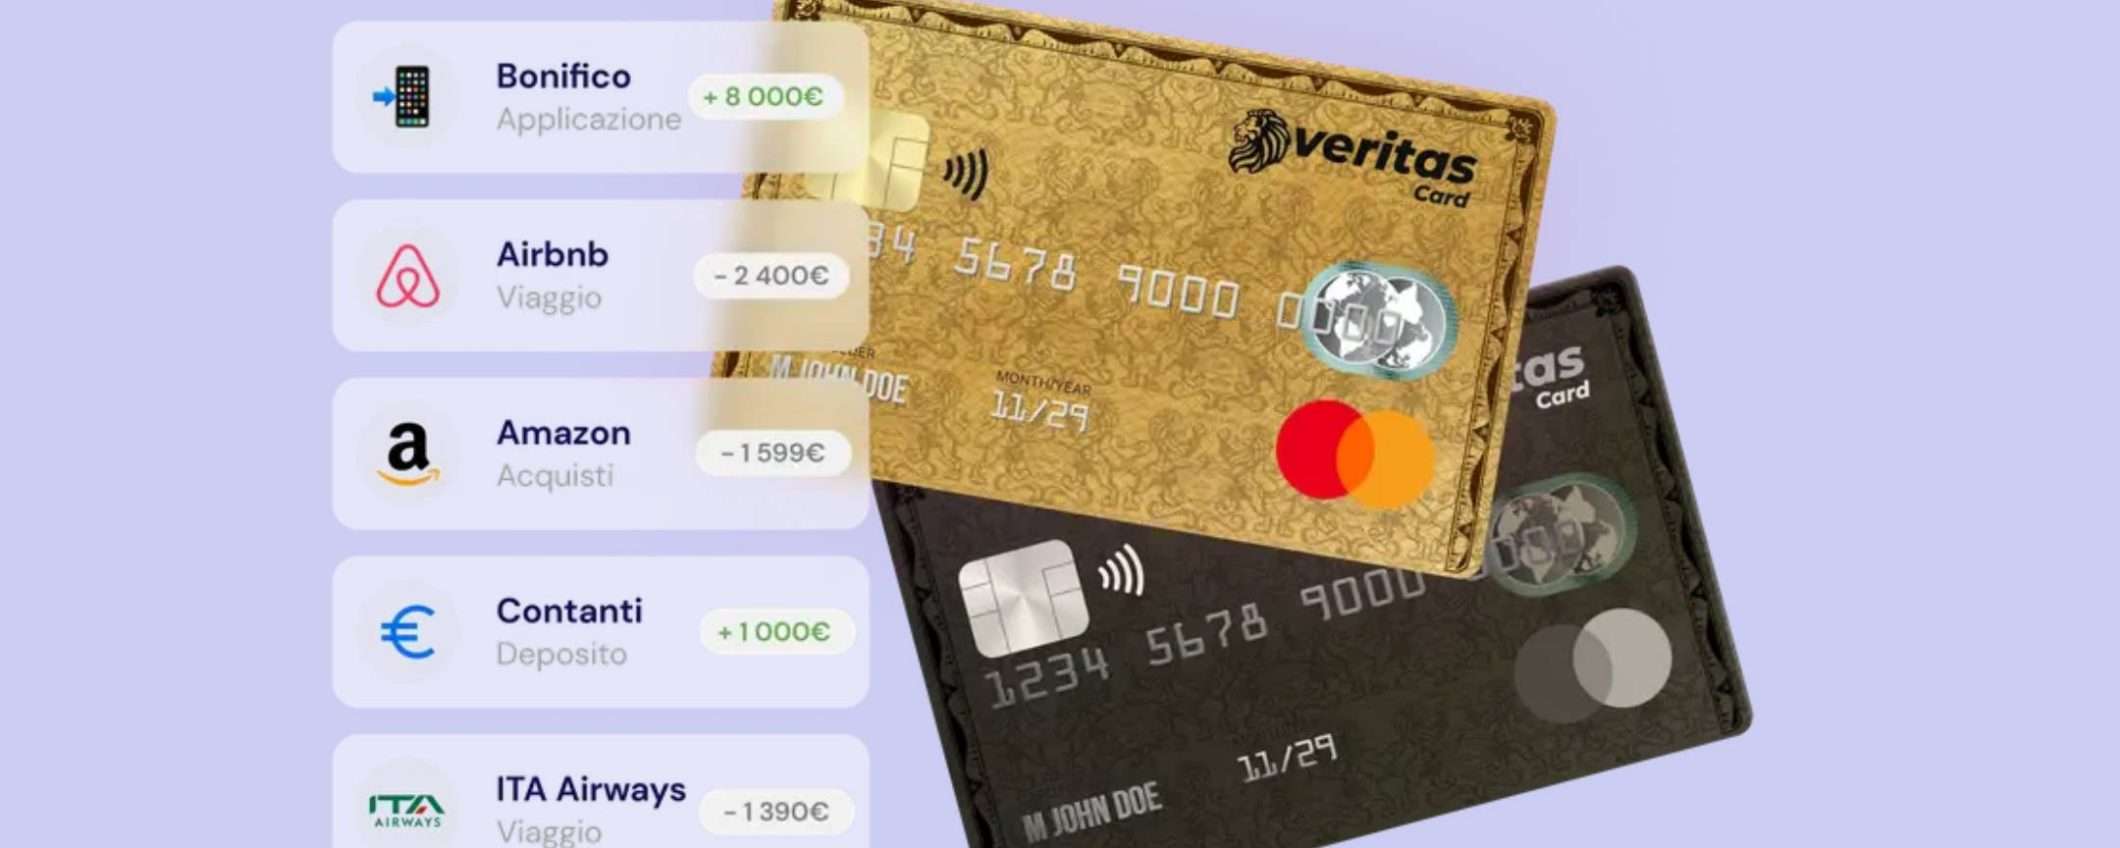 Veritas: Carta Prepagata MasterCard con IBAN personalizzabile